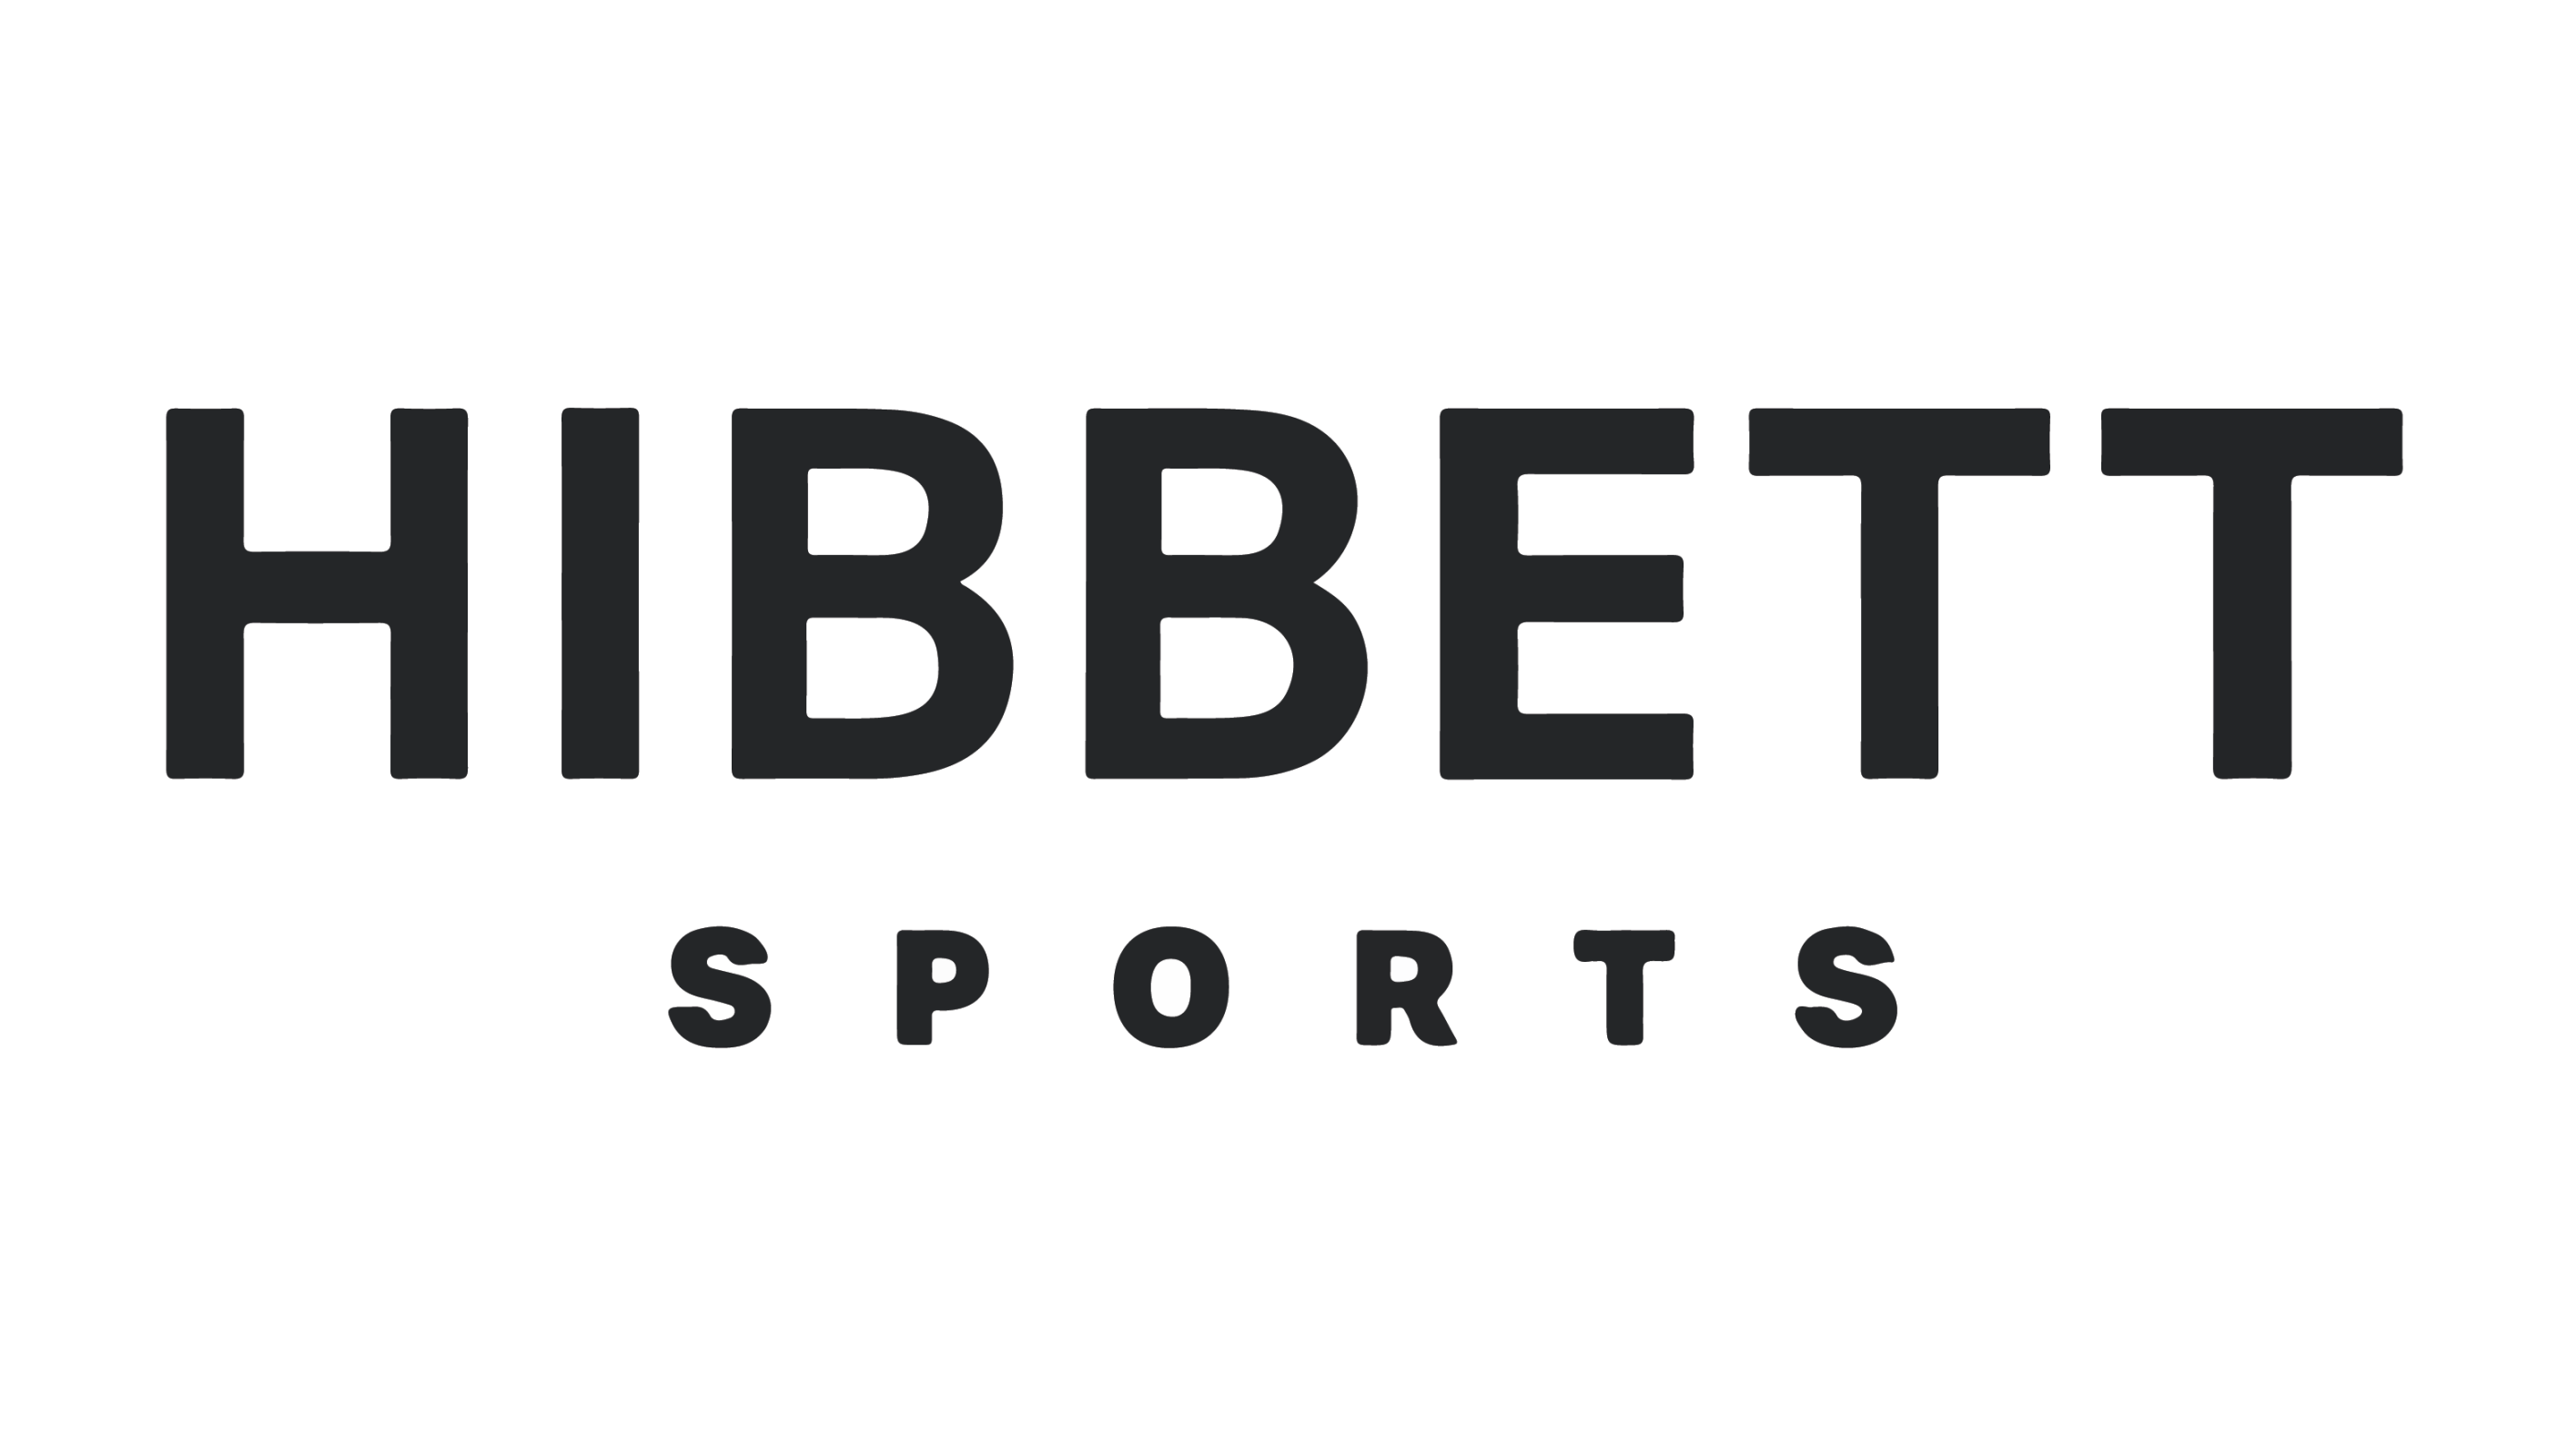 Hibbett Sports's Image